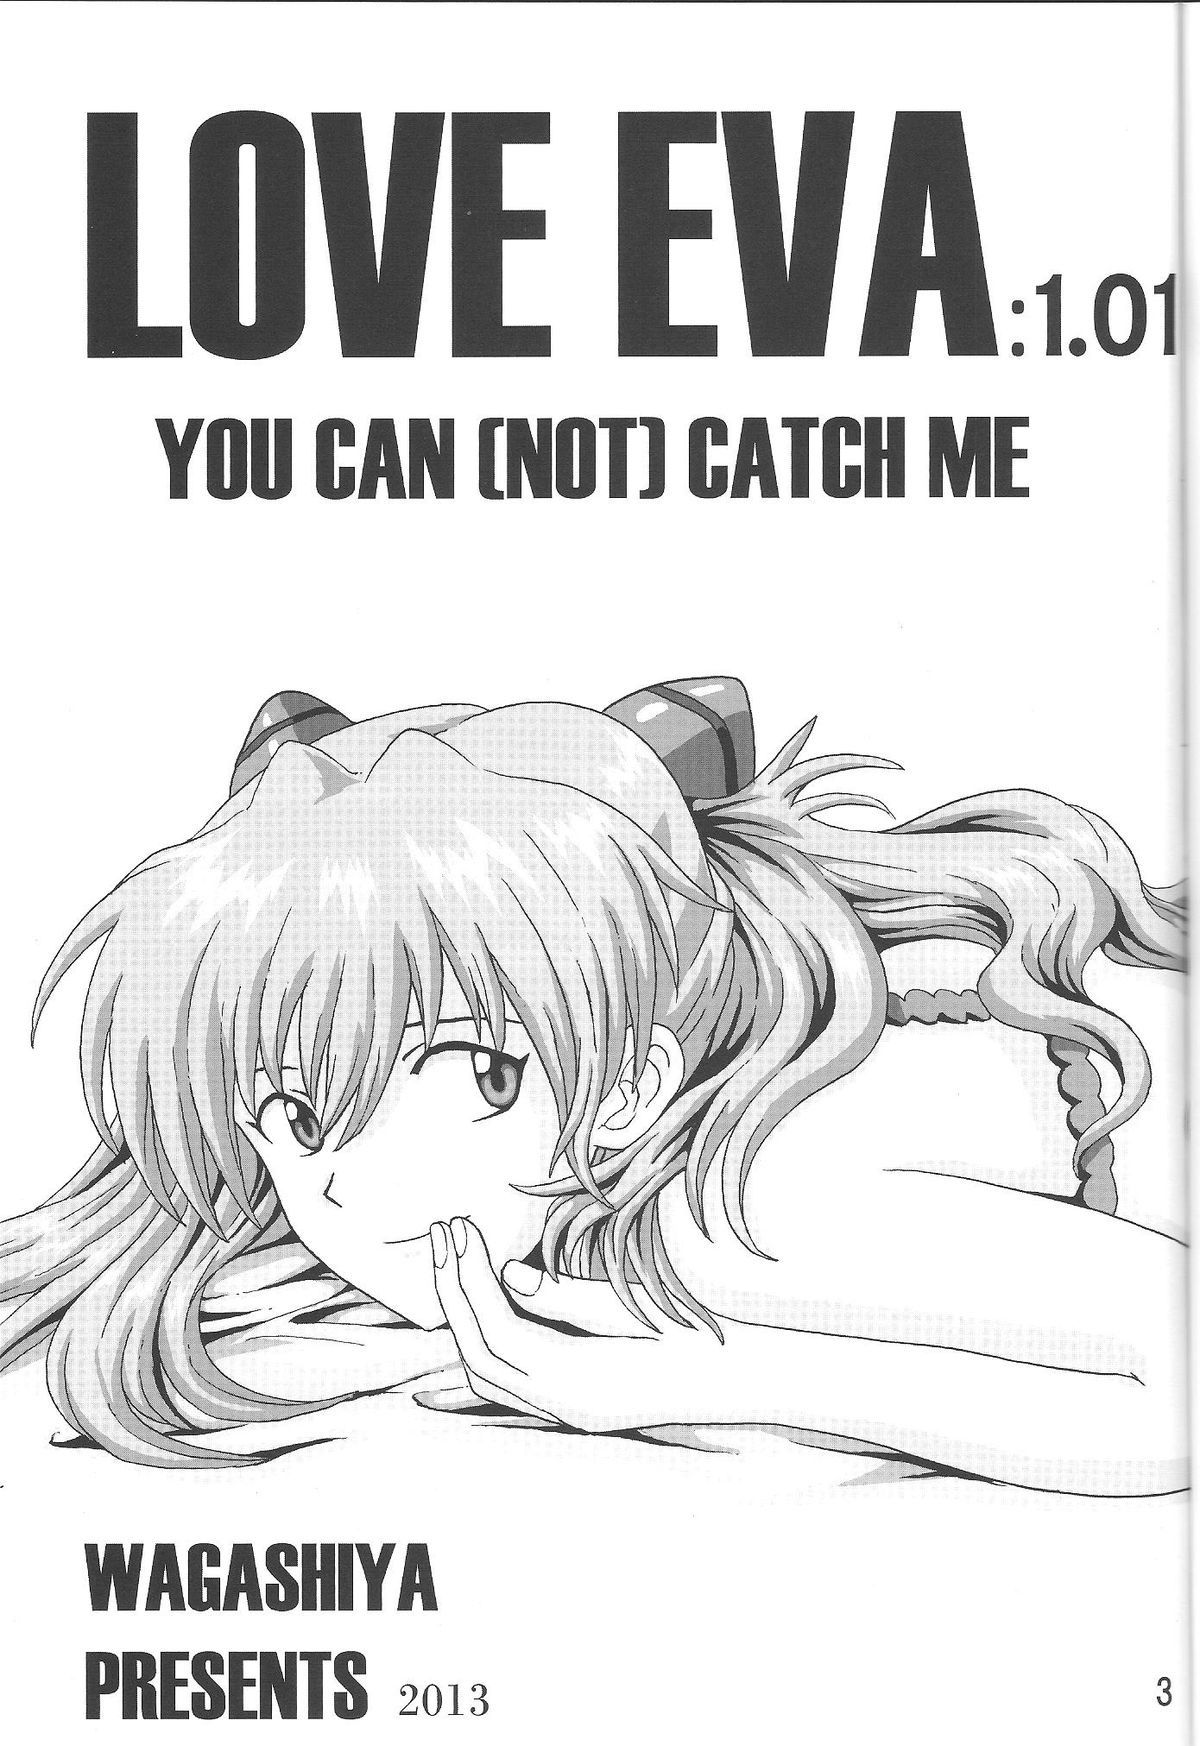 (C85) [和菓子屋 (甘井ヤドラキ)] LOVE-EVA:1.01 You can [not] catch me (新世紀エヴァンゲリオン)